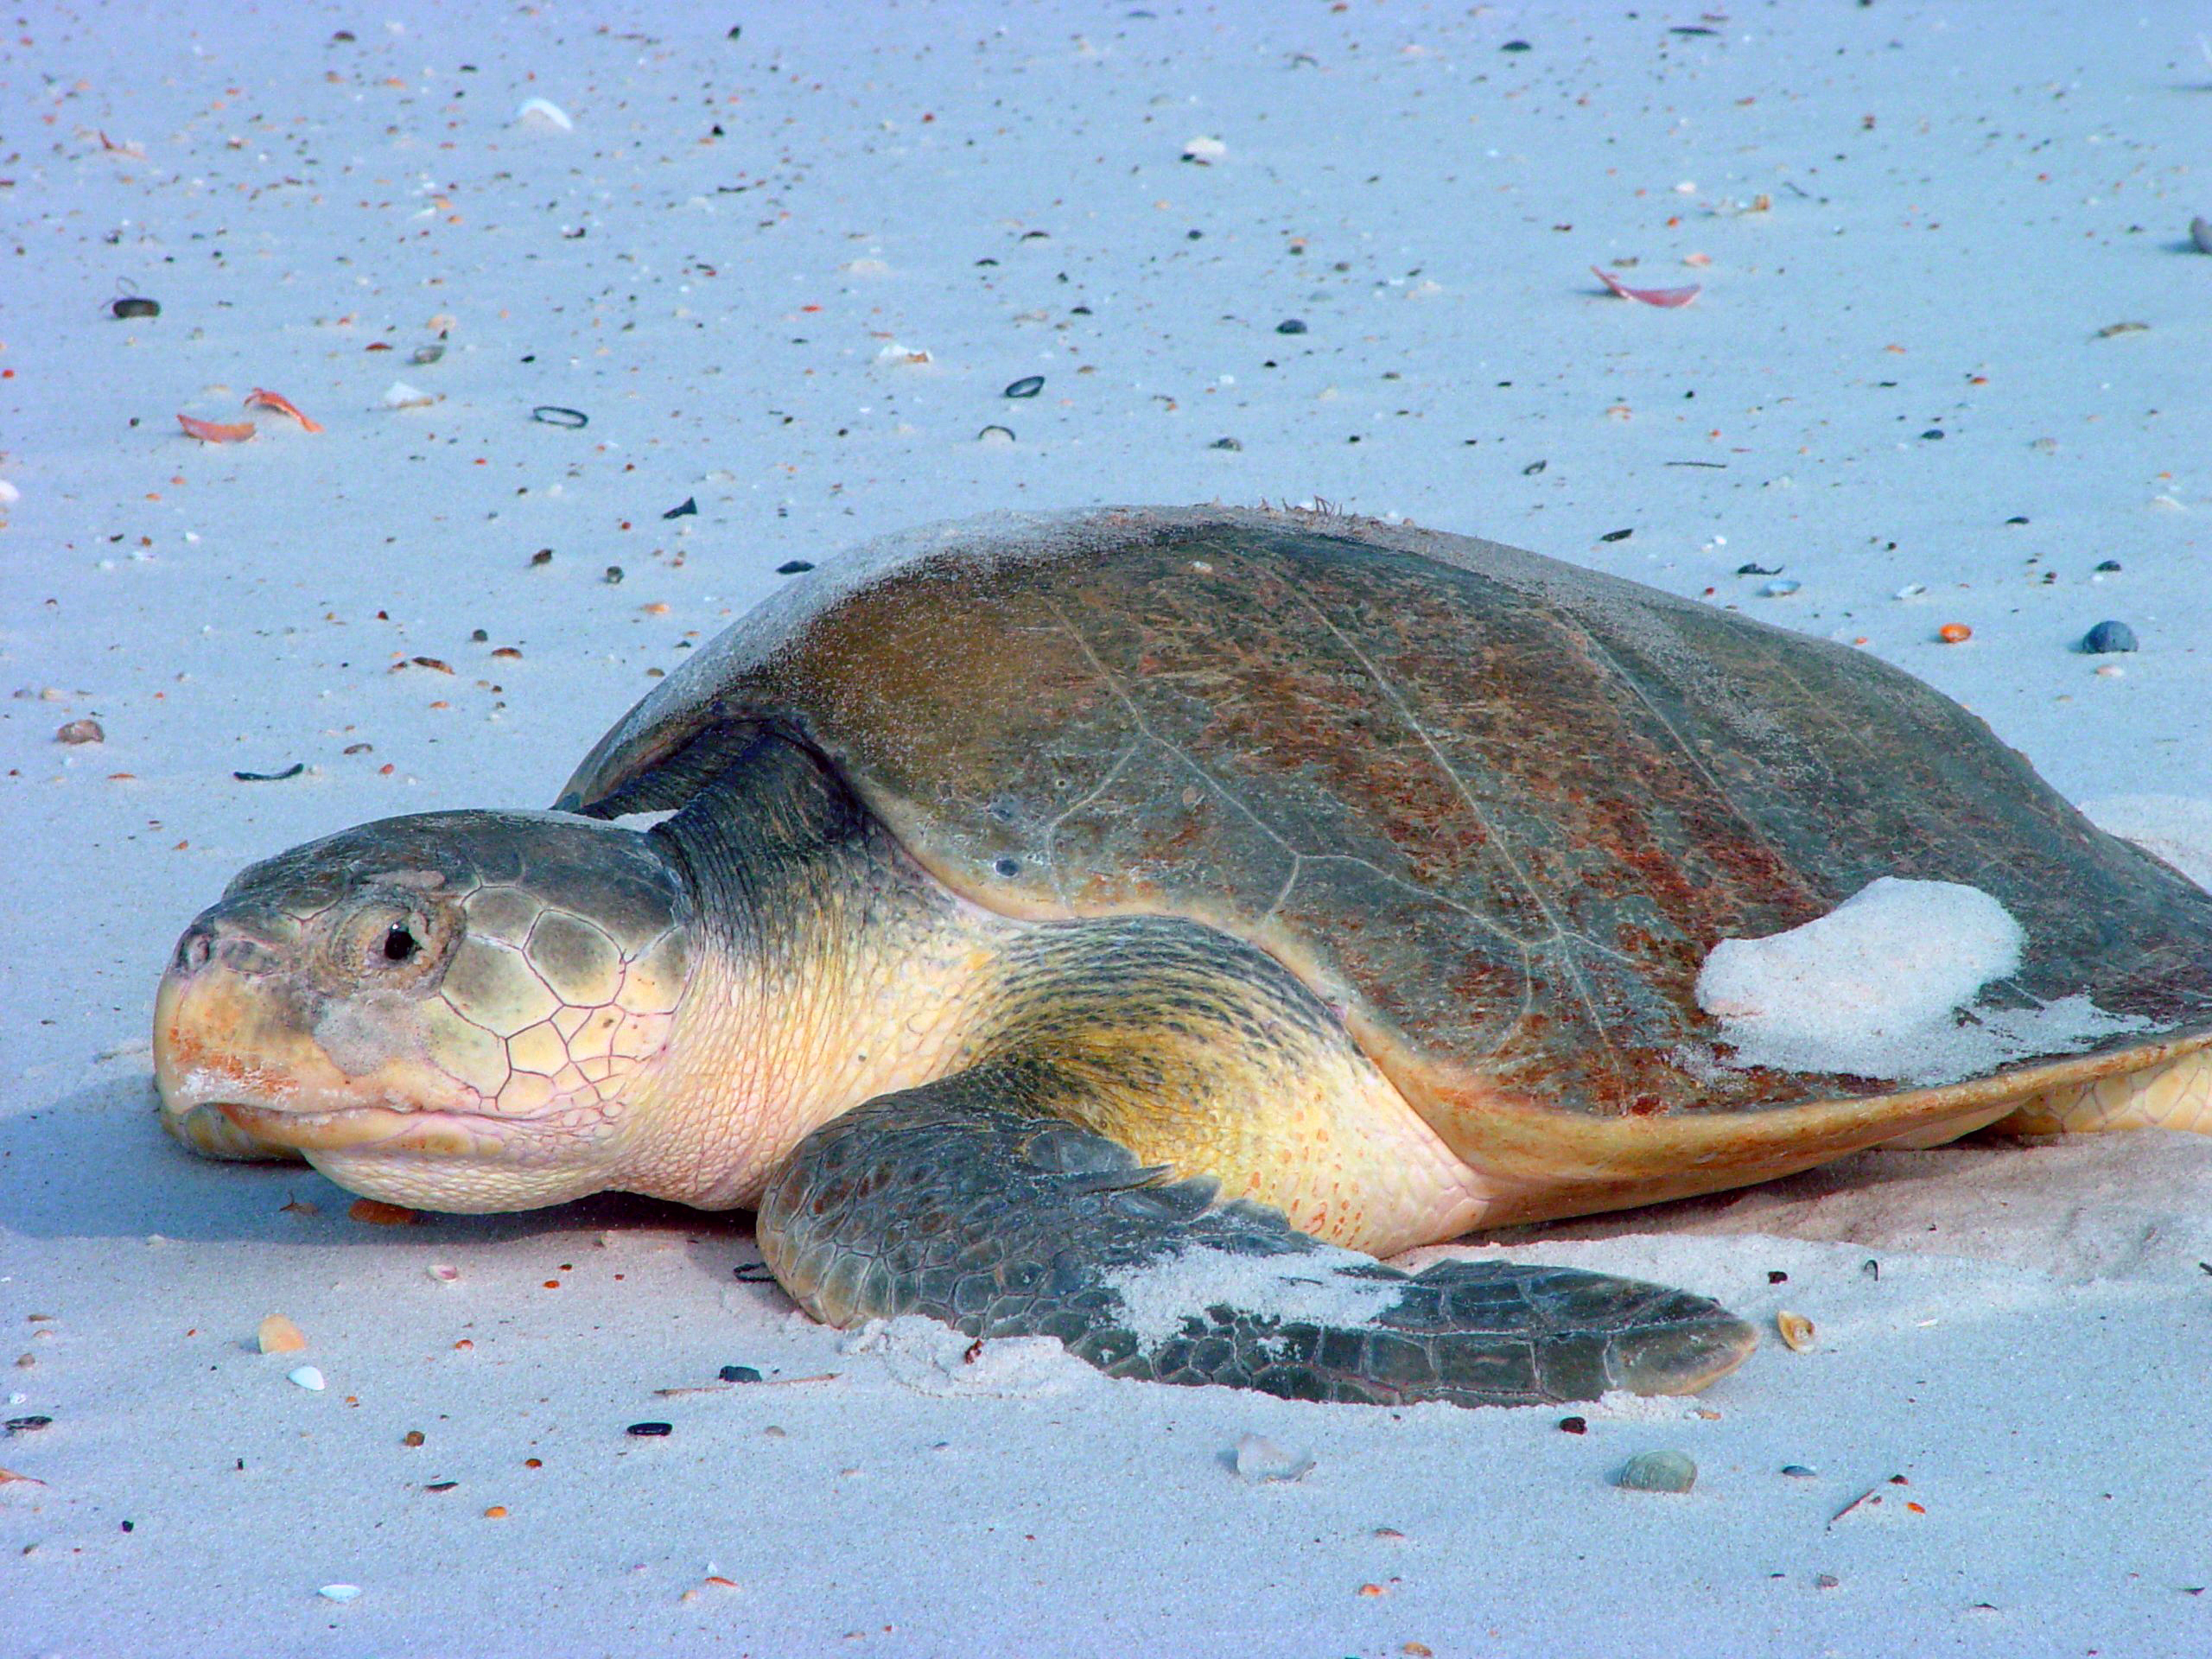 A greenish brown sea turtle laying on the beach